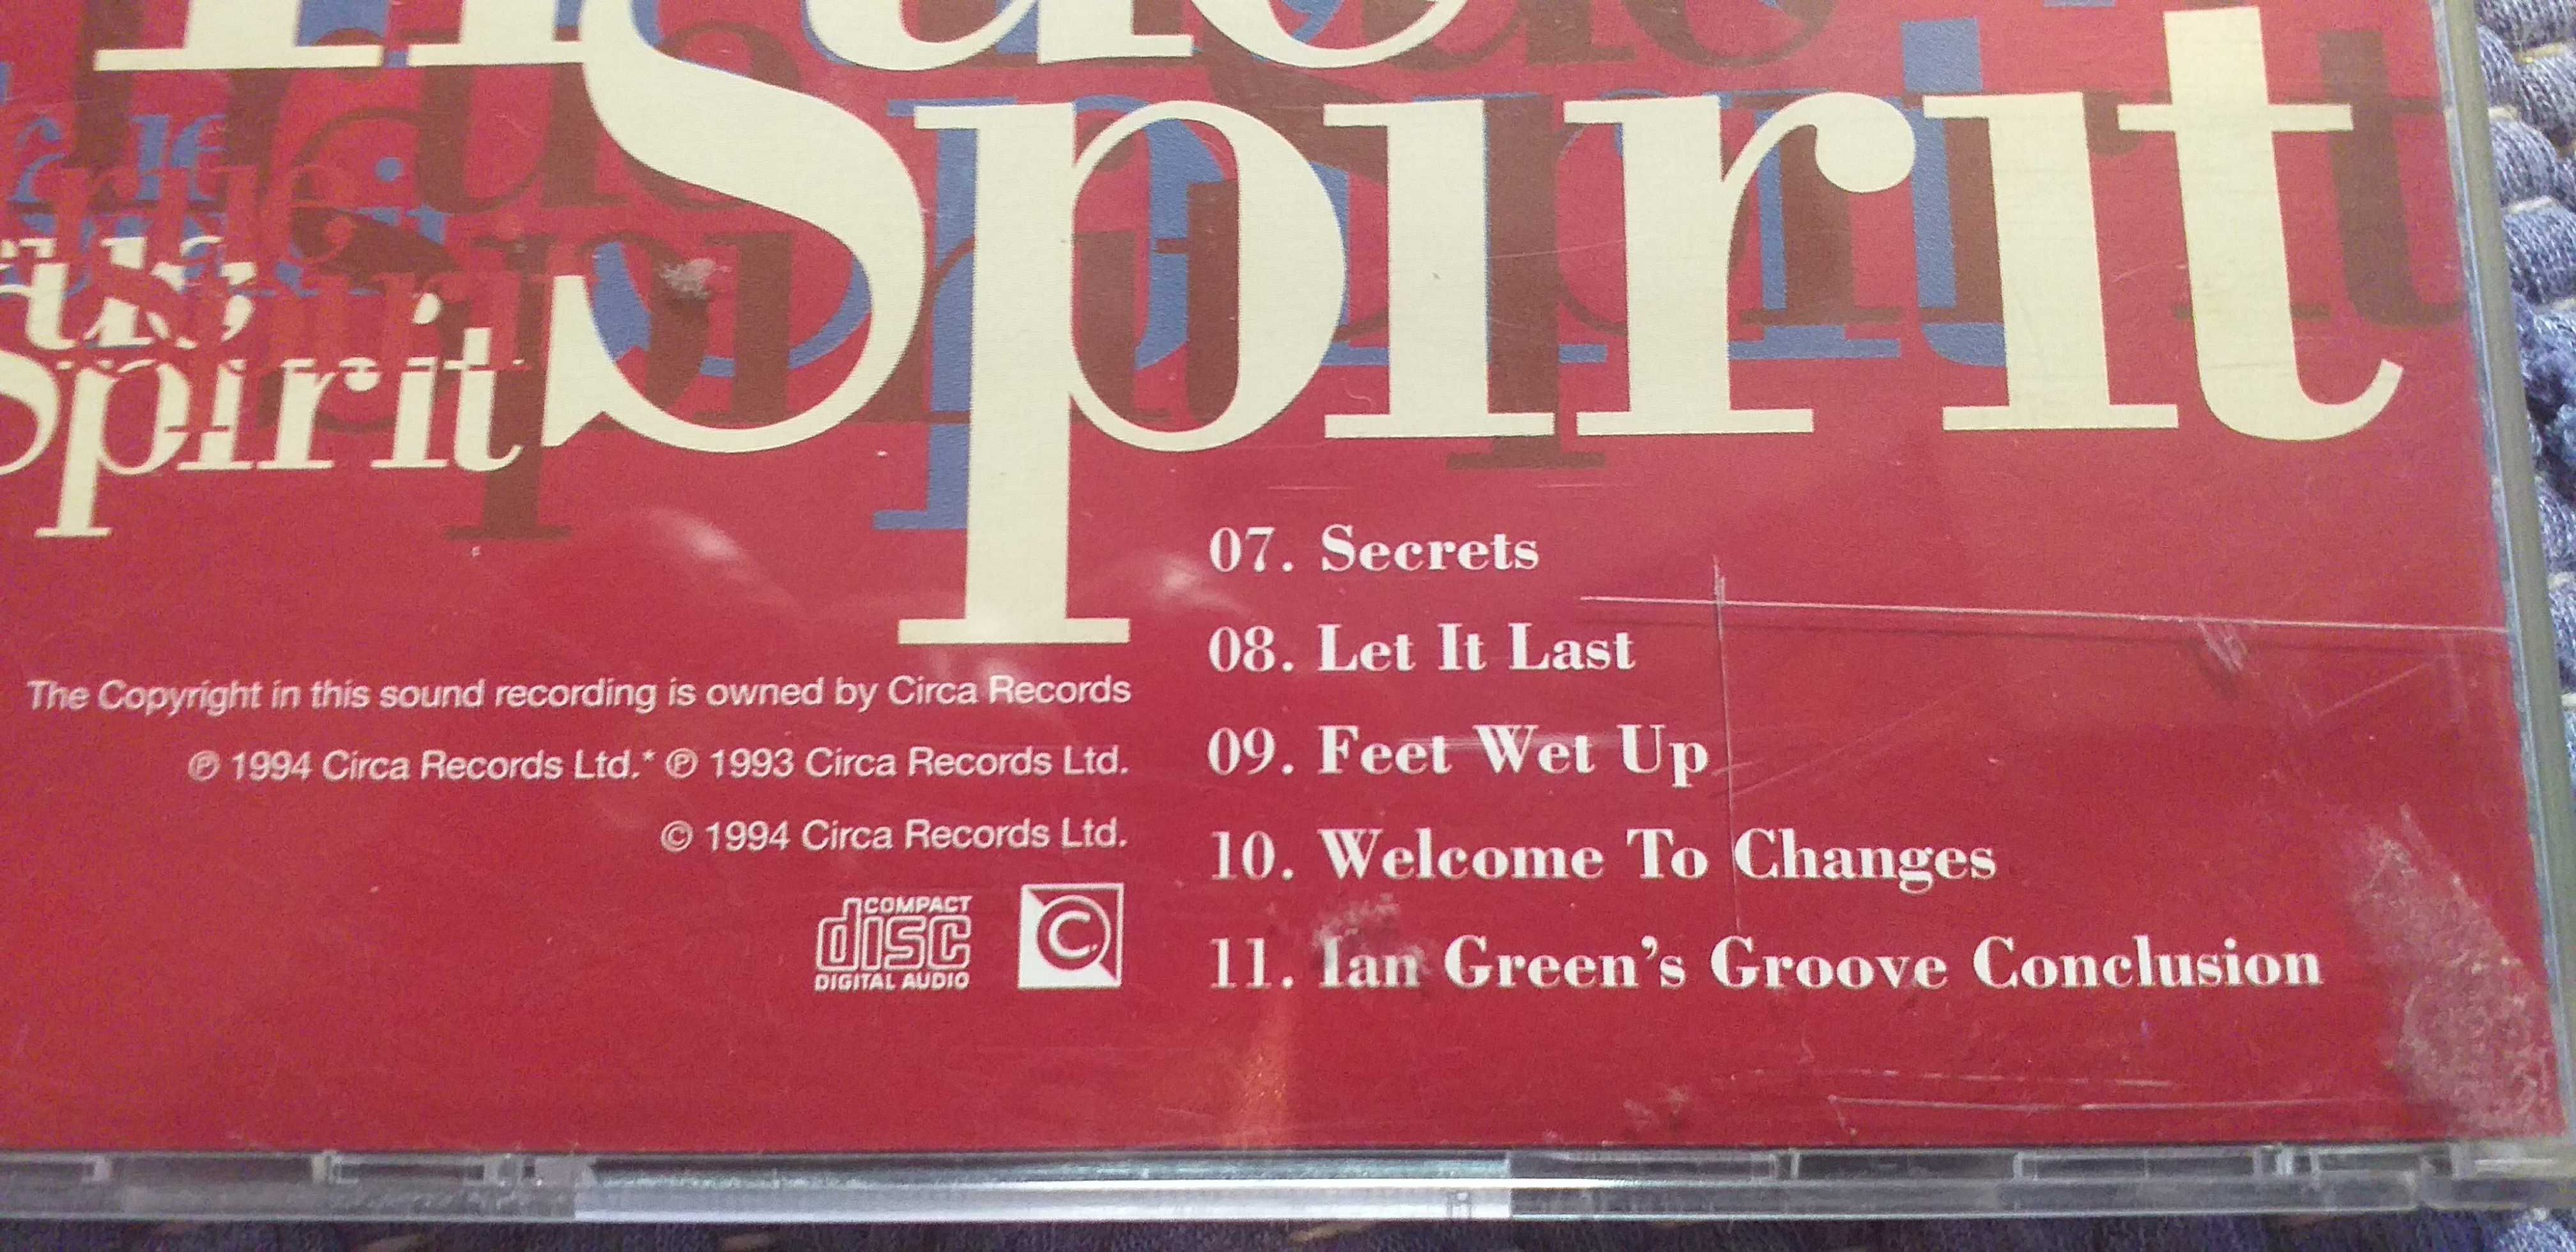 Carleen Anderson - Spirit - CD - portes incluidos